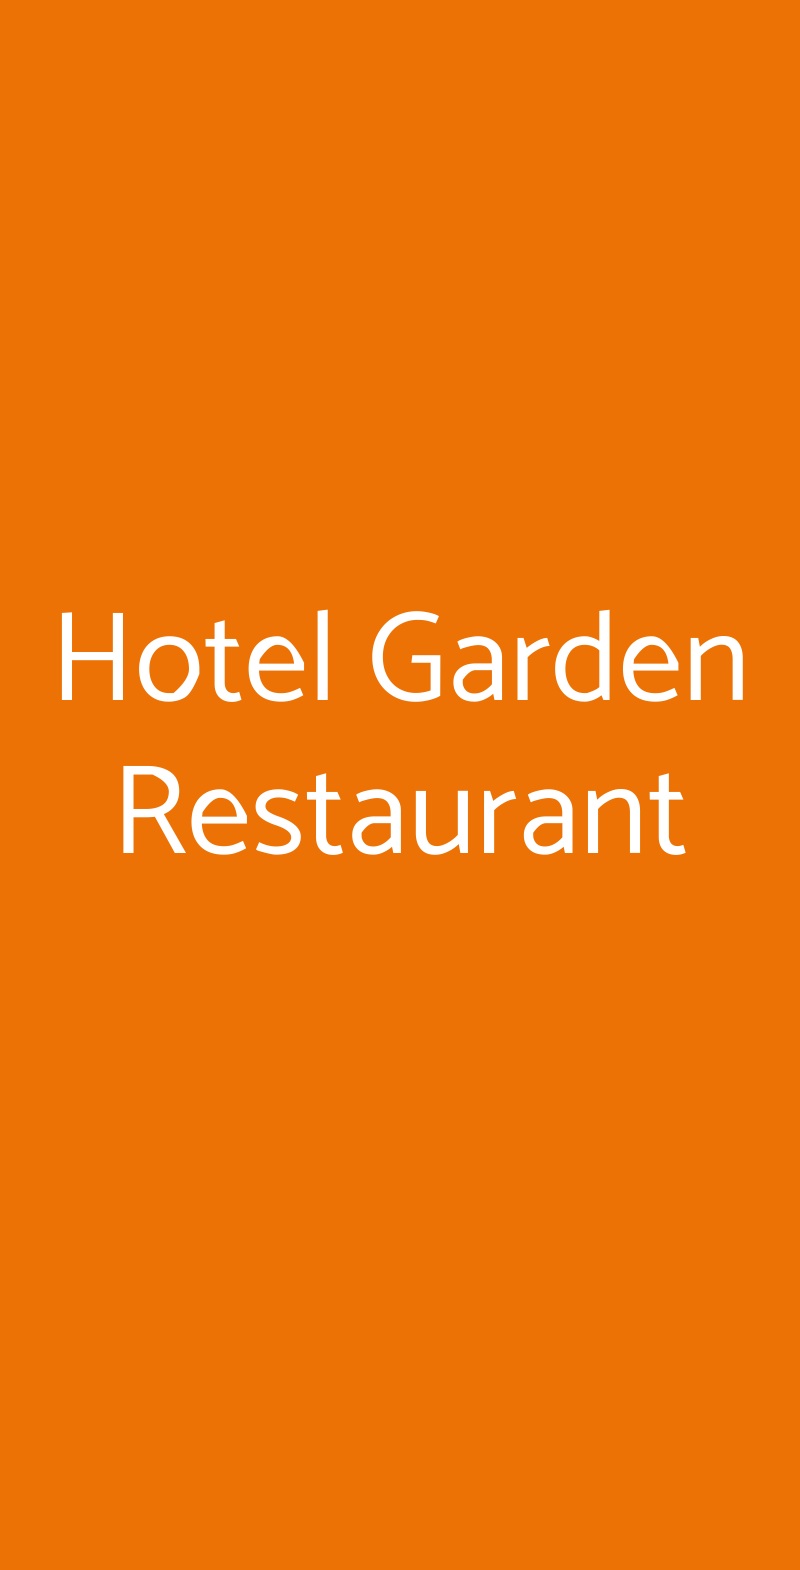 Hotel Garden Restaurant Siena menù 1 pagina